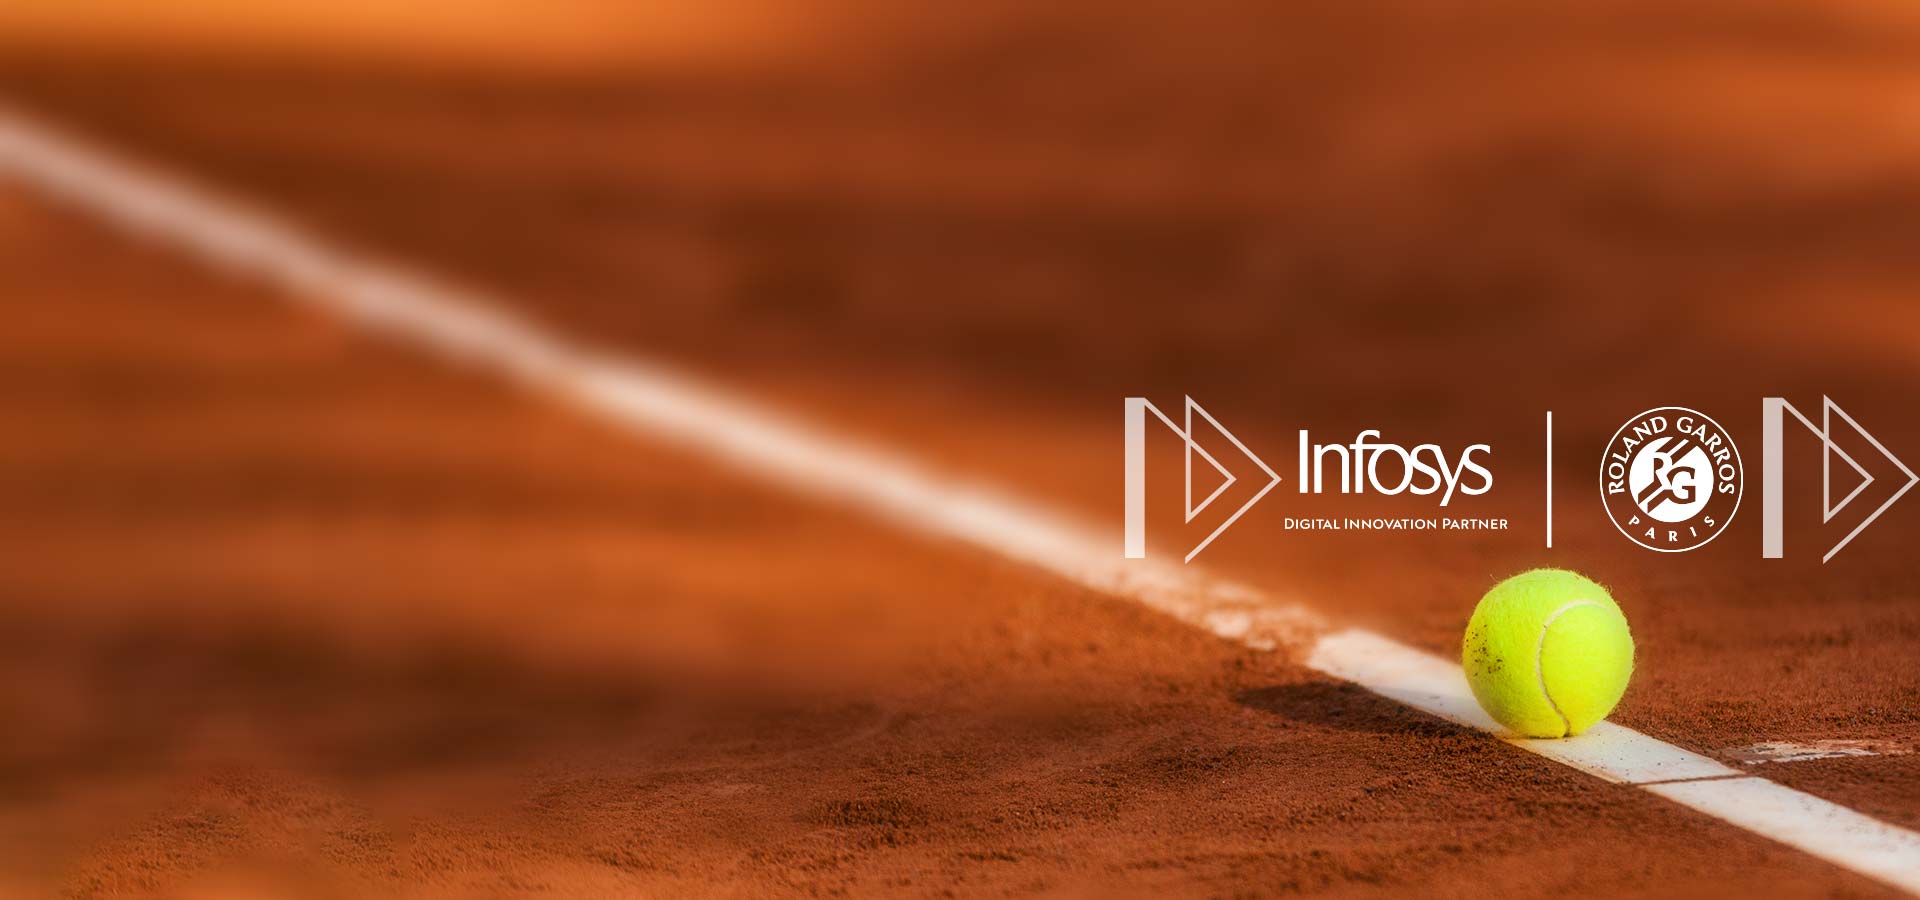 We are the Digital Innovation Partner of Roland Garros
